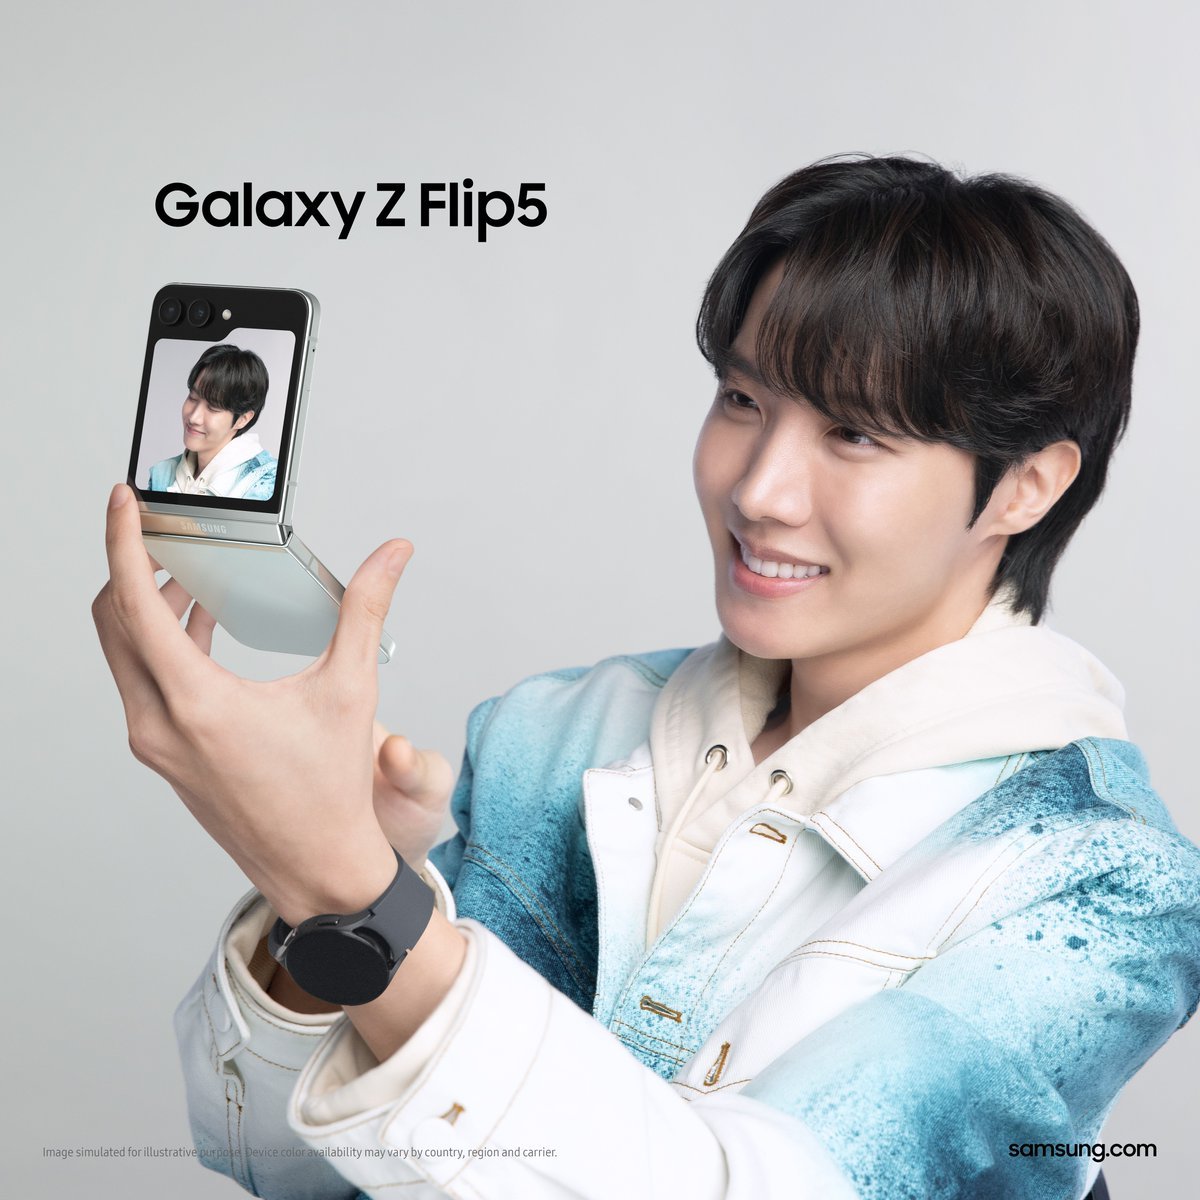 Samsung x BTS: The Influence of Brand Ambassador on Sales 